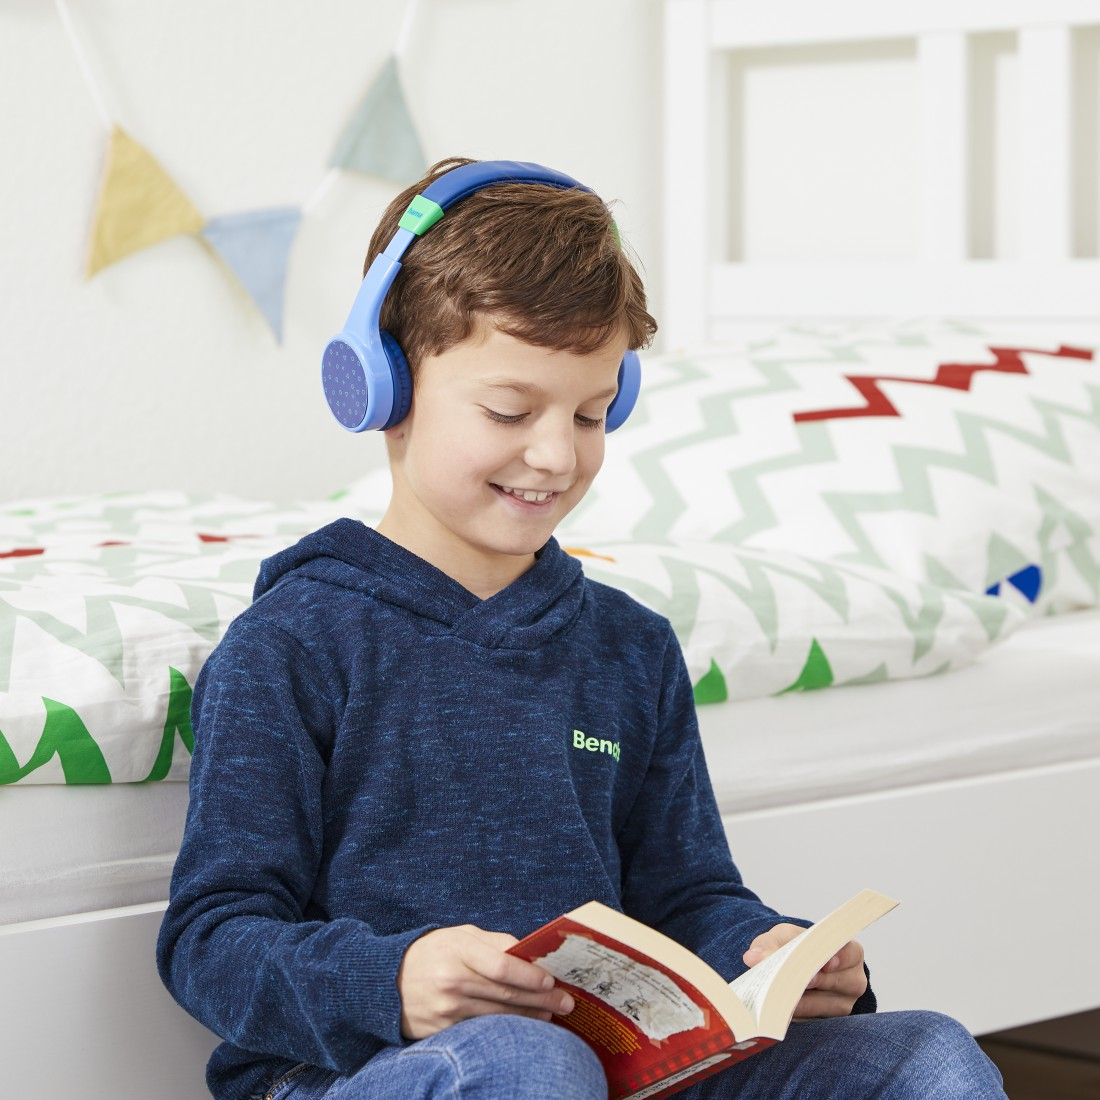 On-ear Bluetooth Dezibel-Begrenzung, Teens Blau mit HAMA Guard Kopfhörer